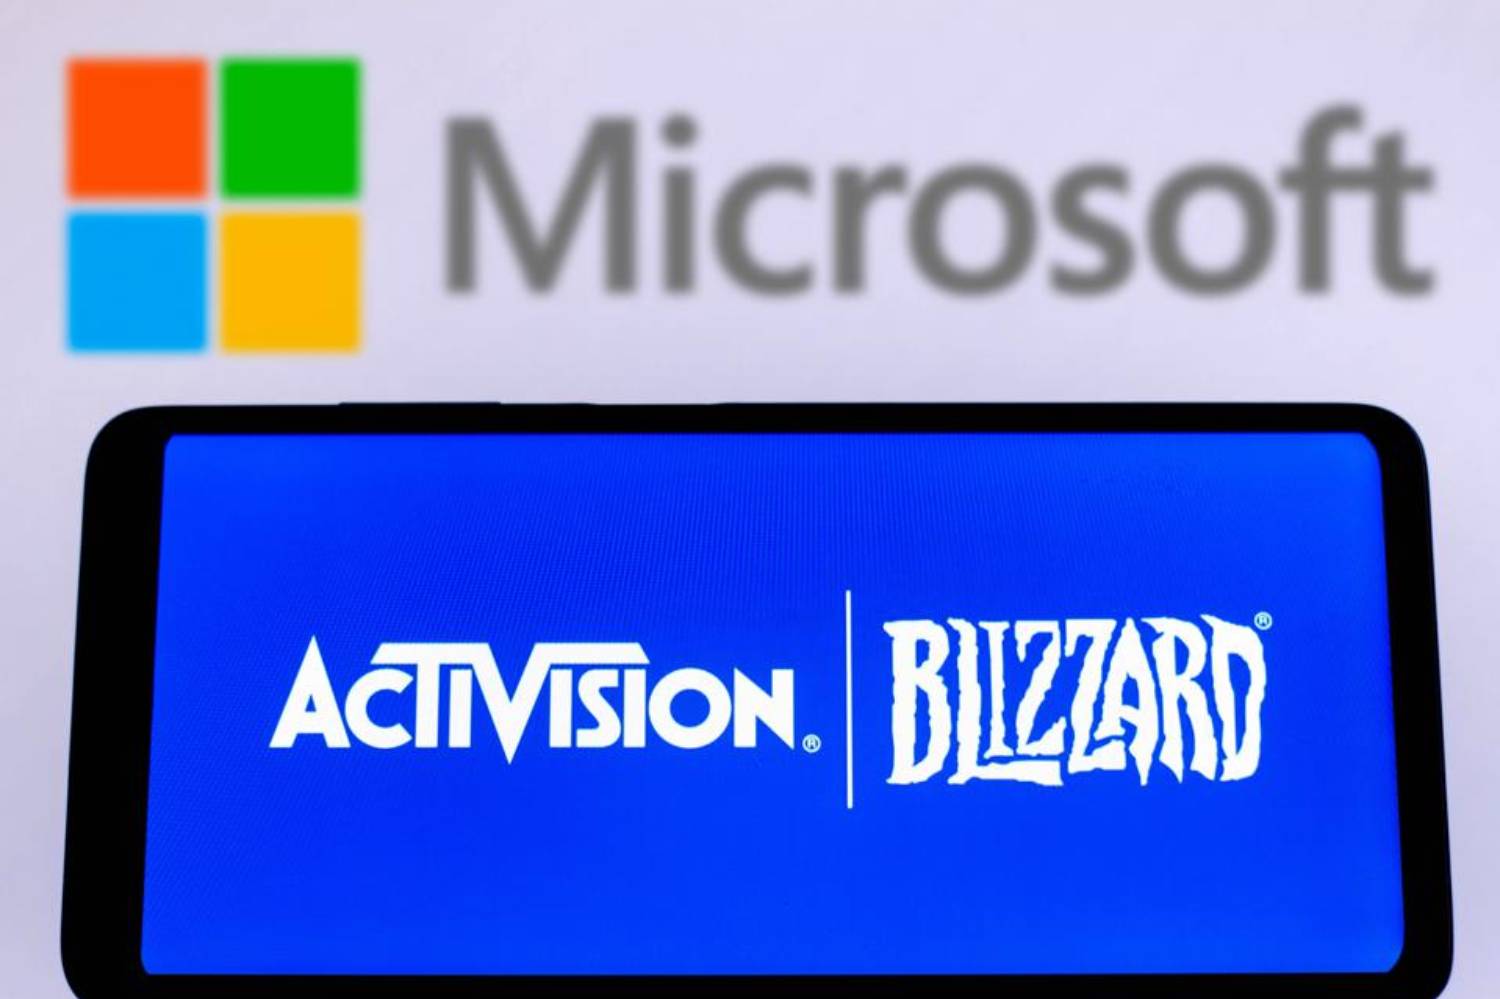 Microsoft poderá oferecer reembolso para jogos comprados